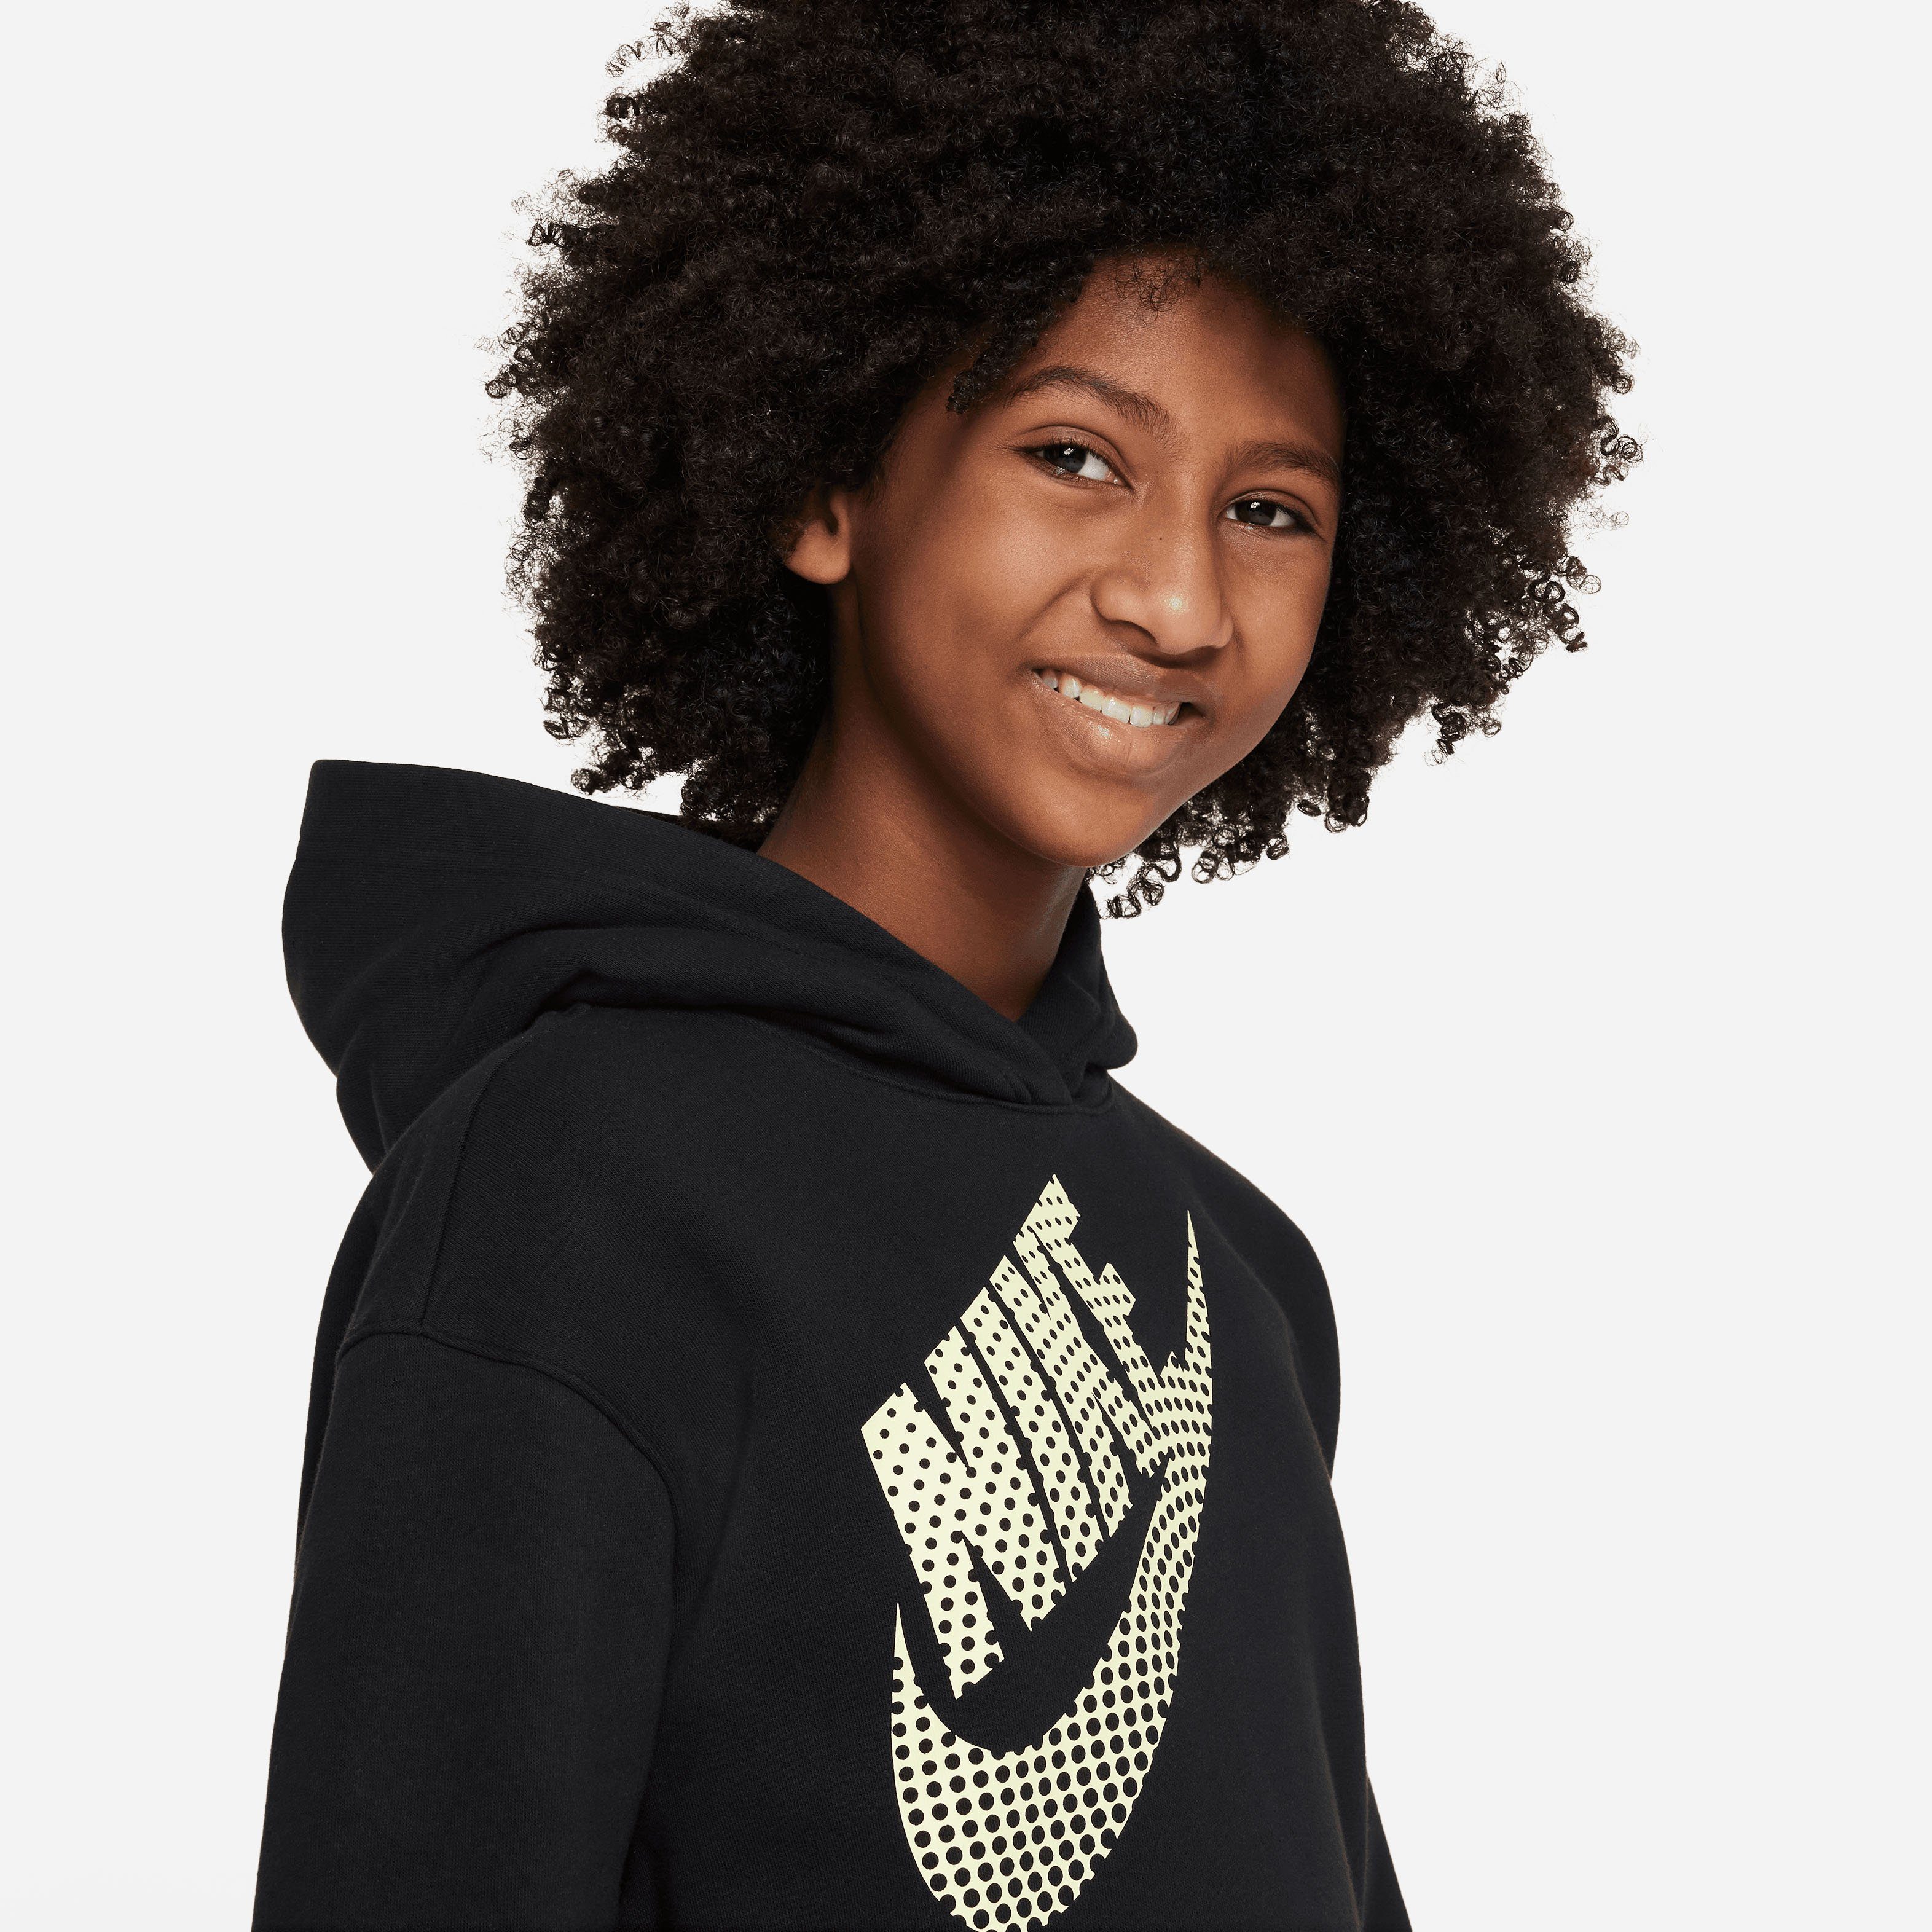 NSW Kapuzensweatshirt BLACK Sportswear PO G Nike HOODIE OS